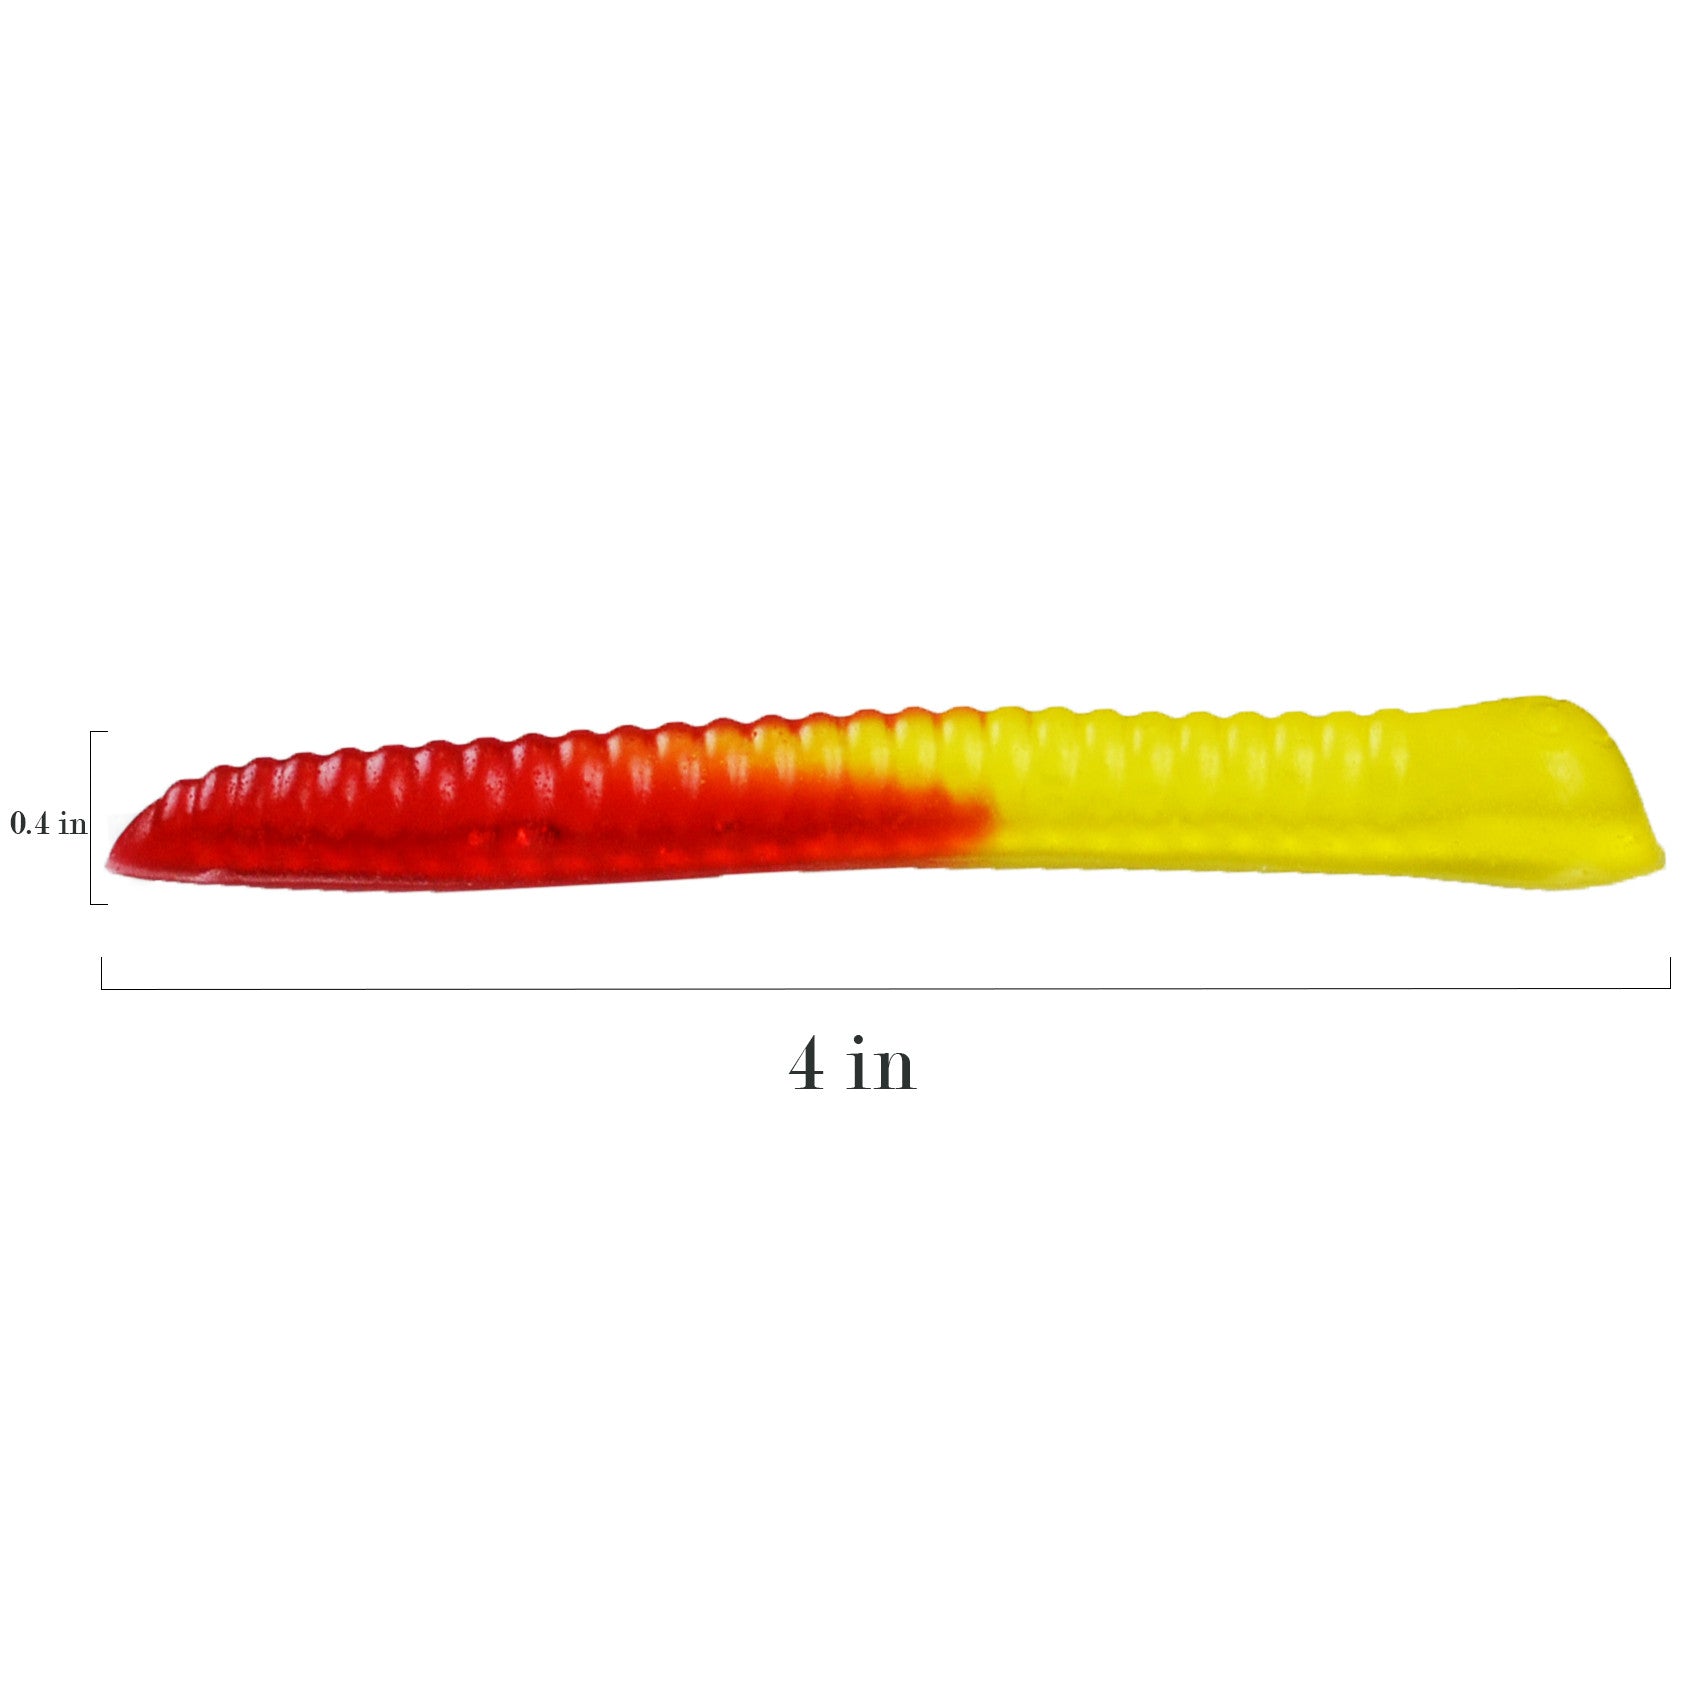 Gummy Worm Molds Silicone 6ML Large 4PCS 2 Size Candy Making Kit